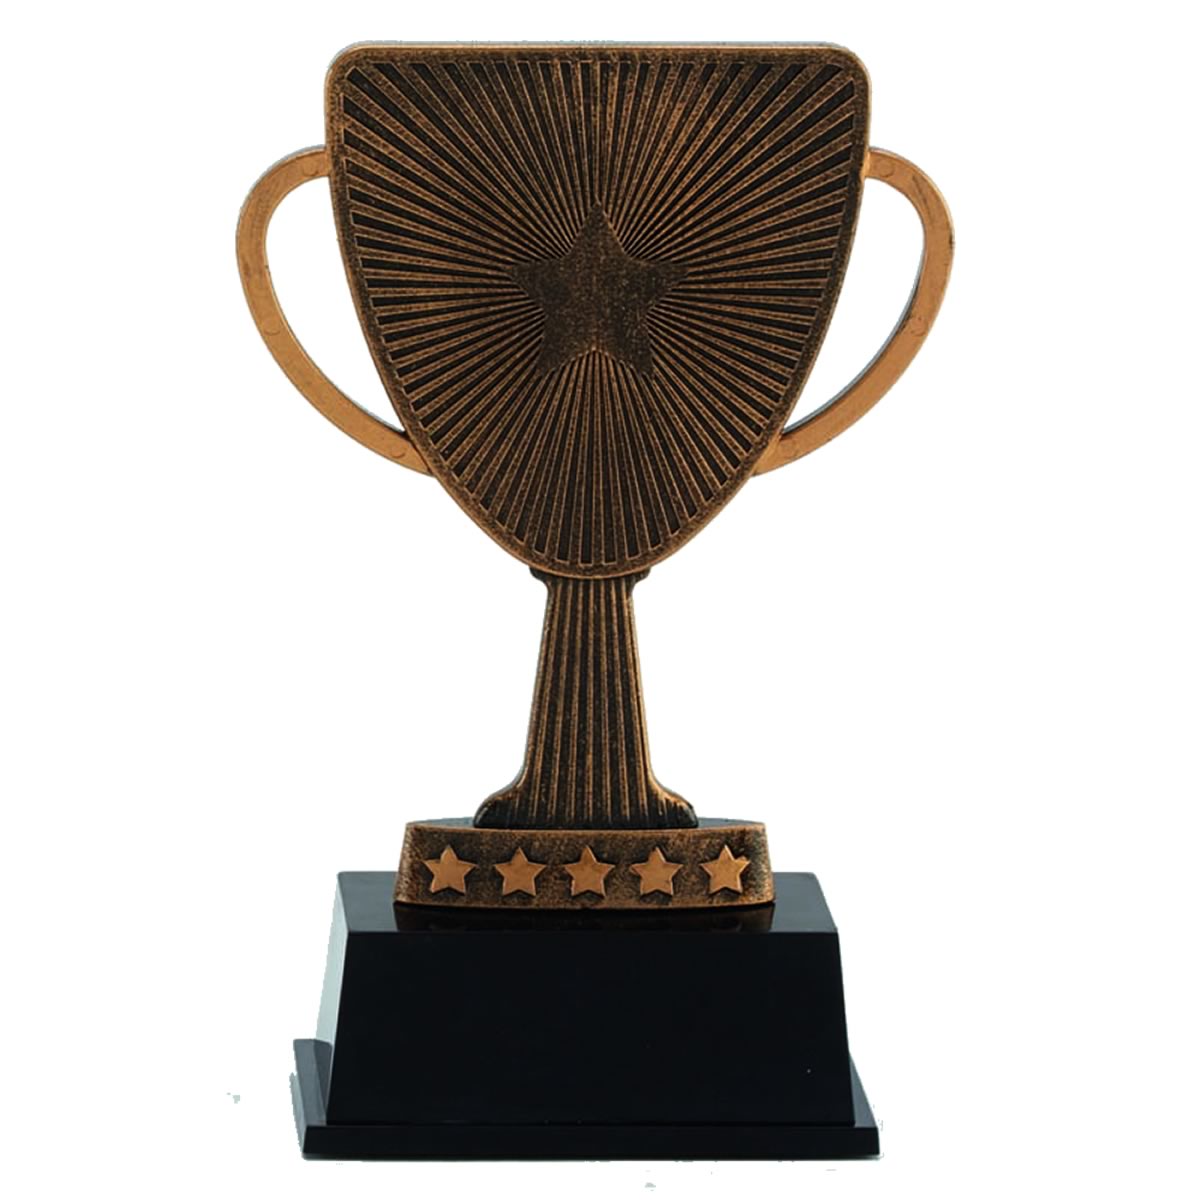 Budget Lion Cup Award - Gold, Silver & Bronze